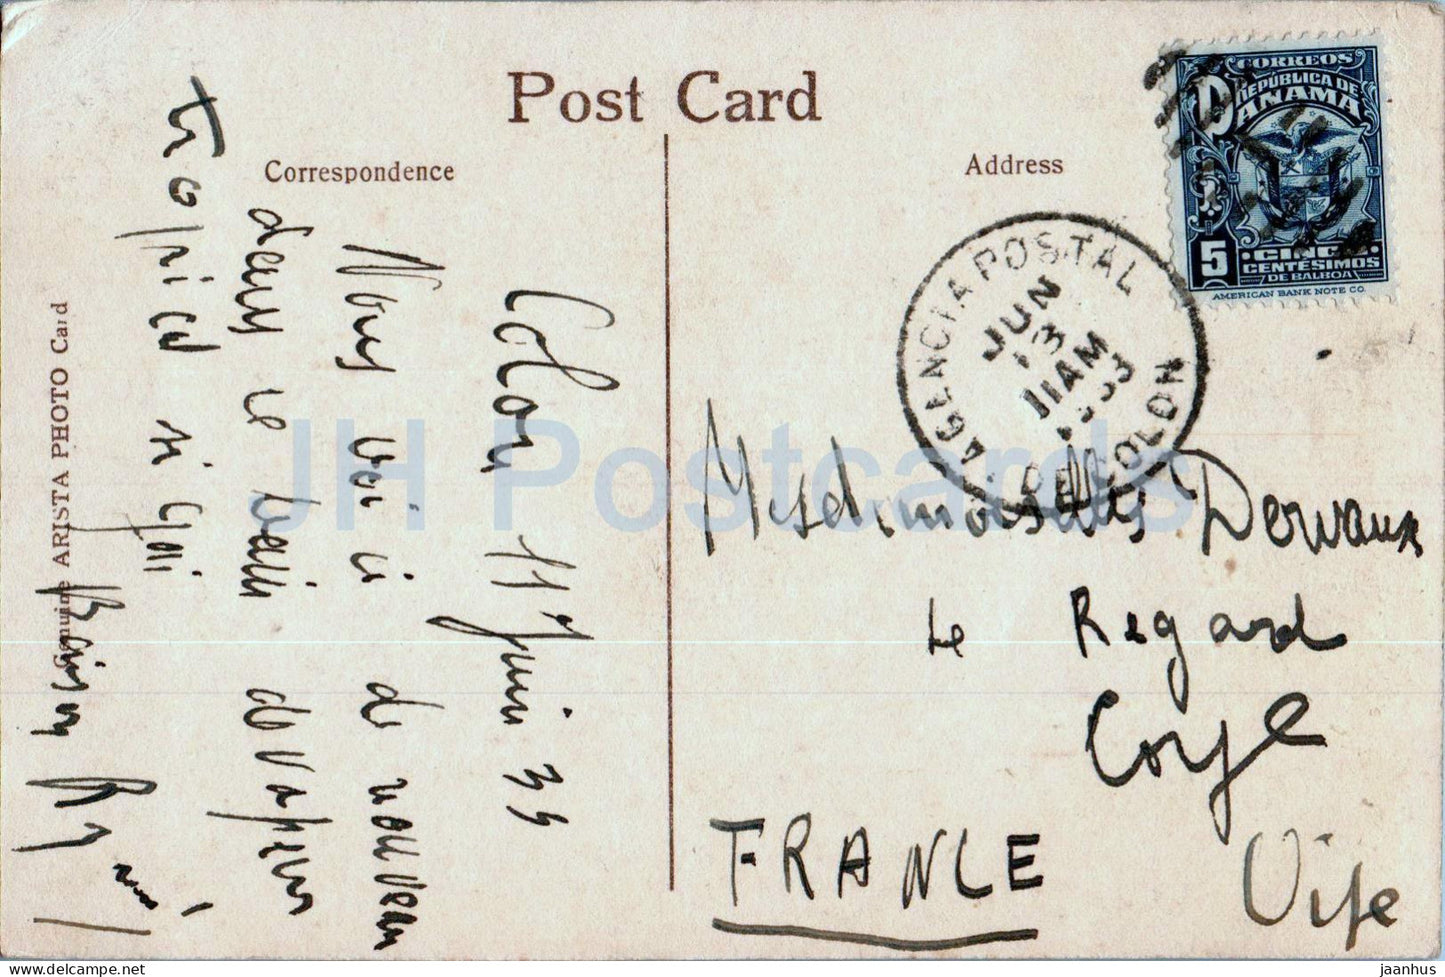 Prado Balboa – Kanalzone – alte Postkarte – 1933 – Panama – gebraucht 